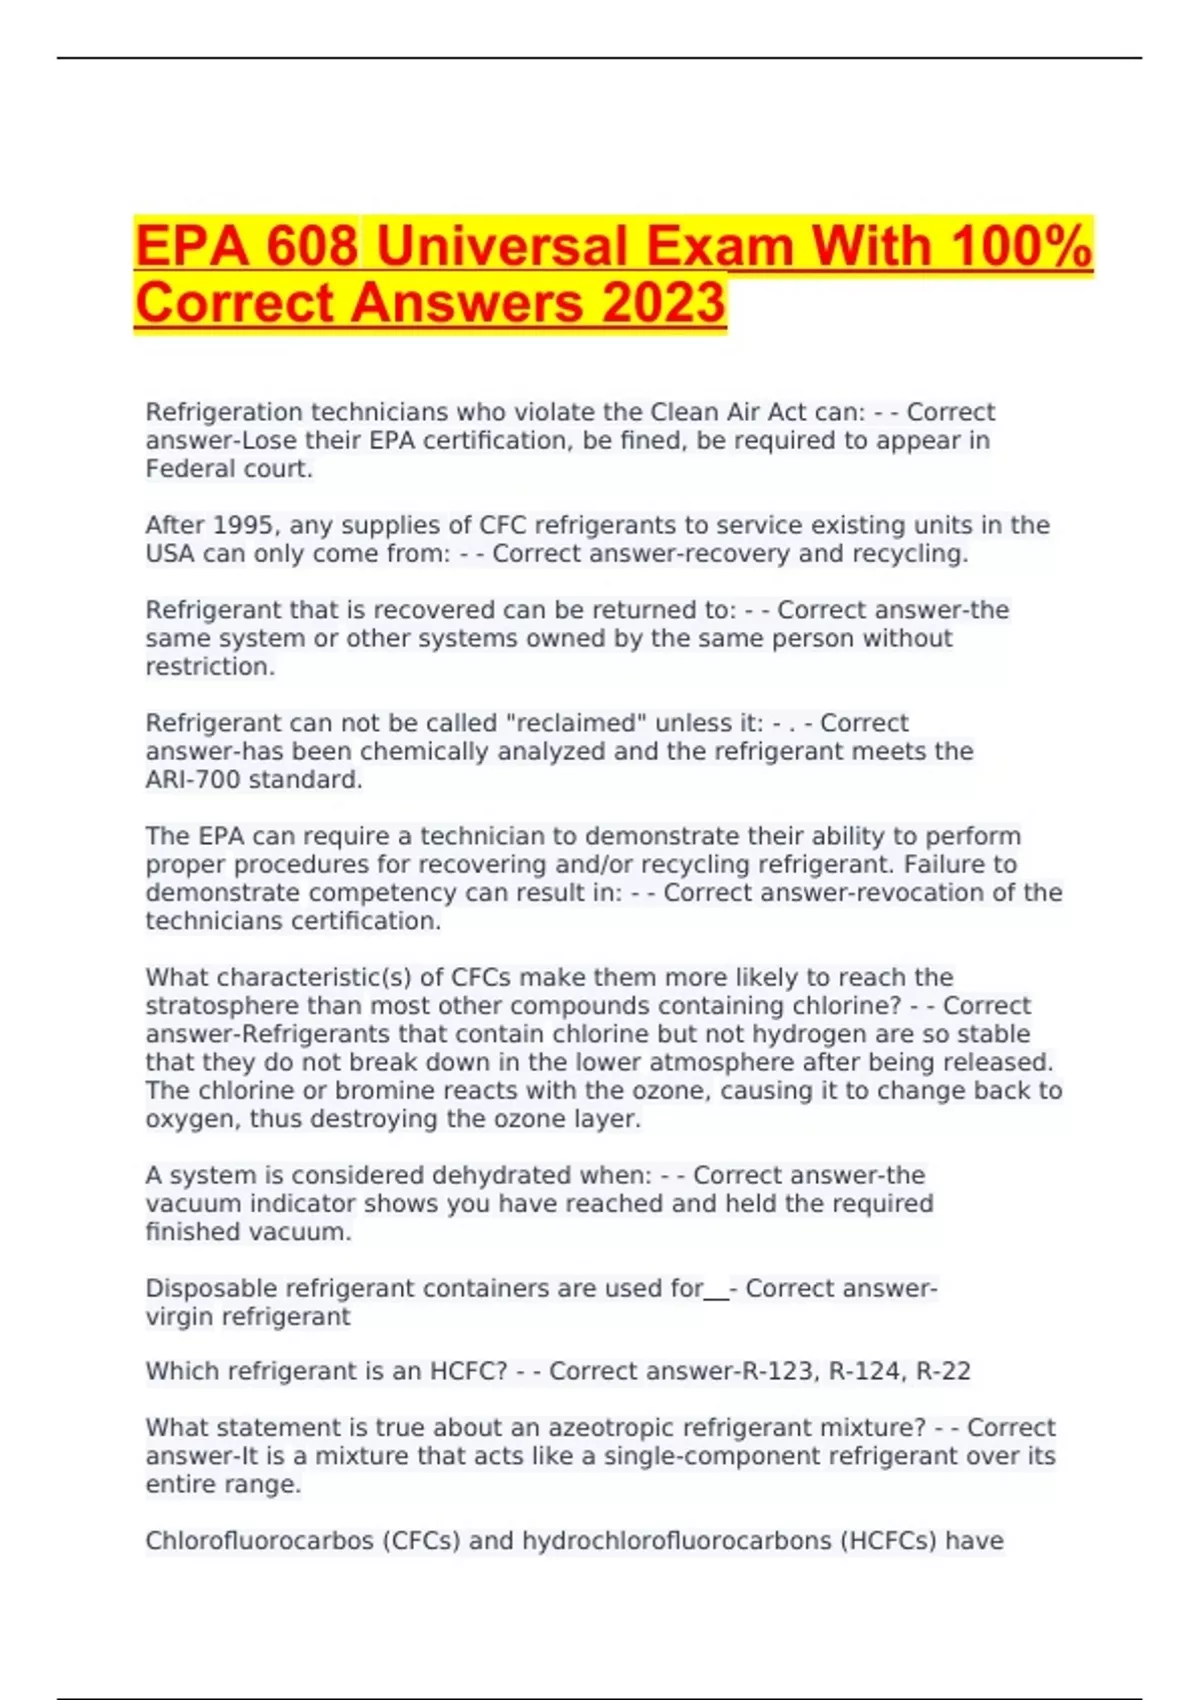 epa-608-universal-exam-with-100-correct-answers-2023-epa-608-stuvia-us